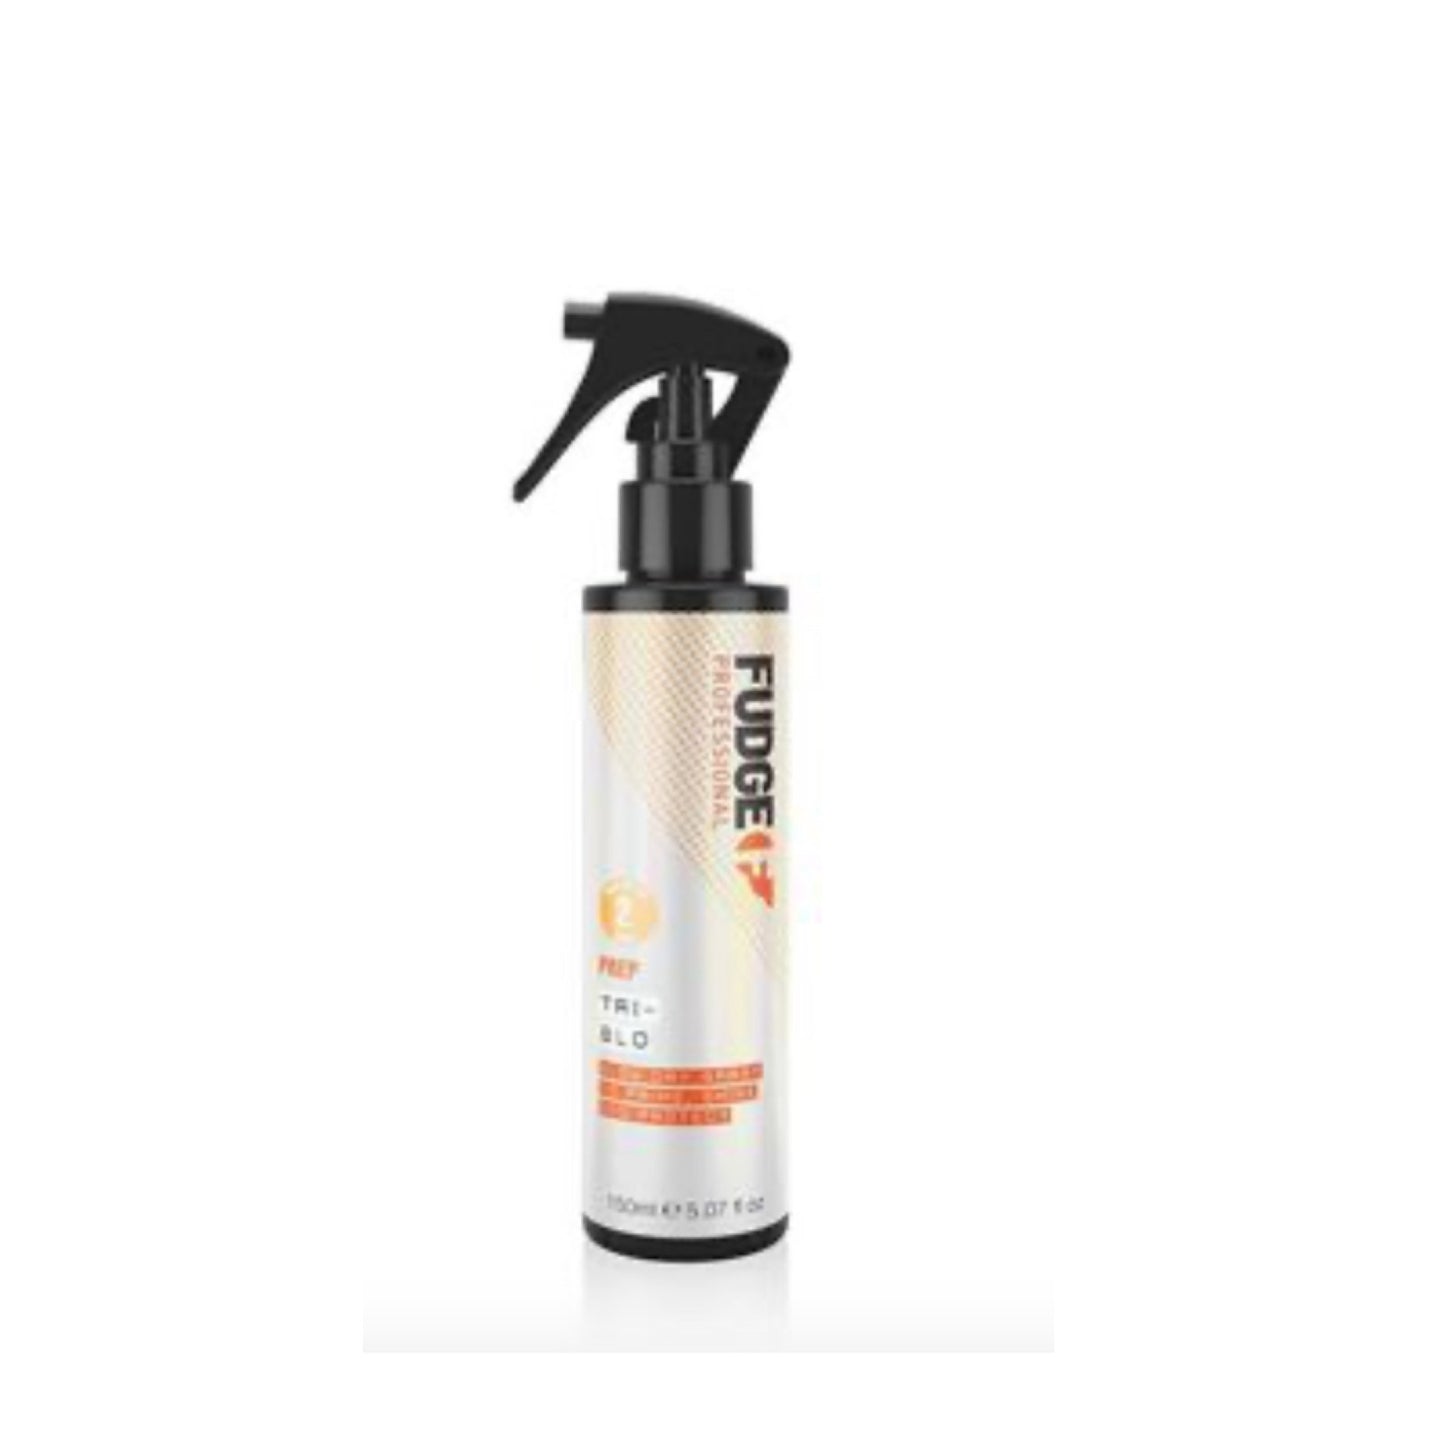 Fudge Tri Blo Prime Shine and Protect Styling Spray (150ml)